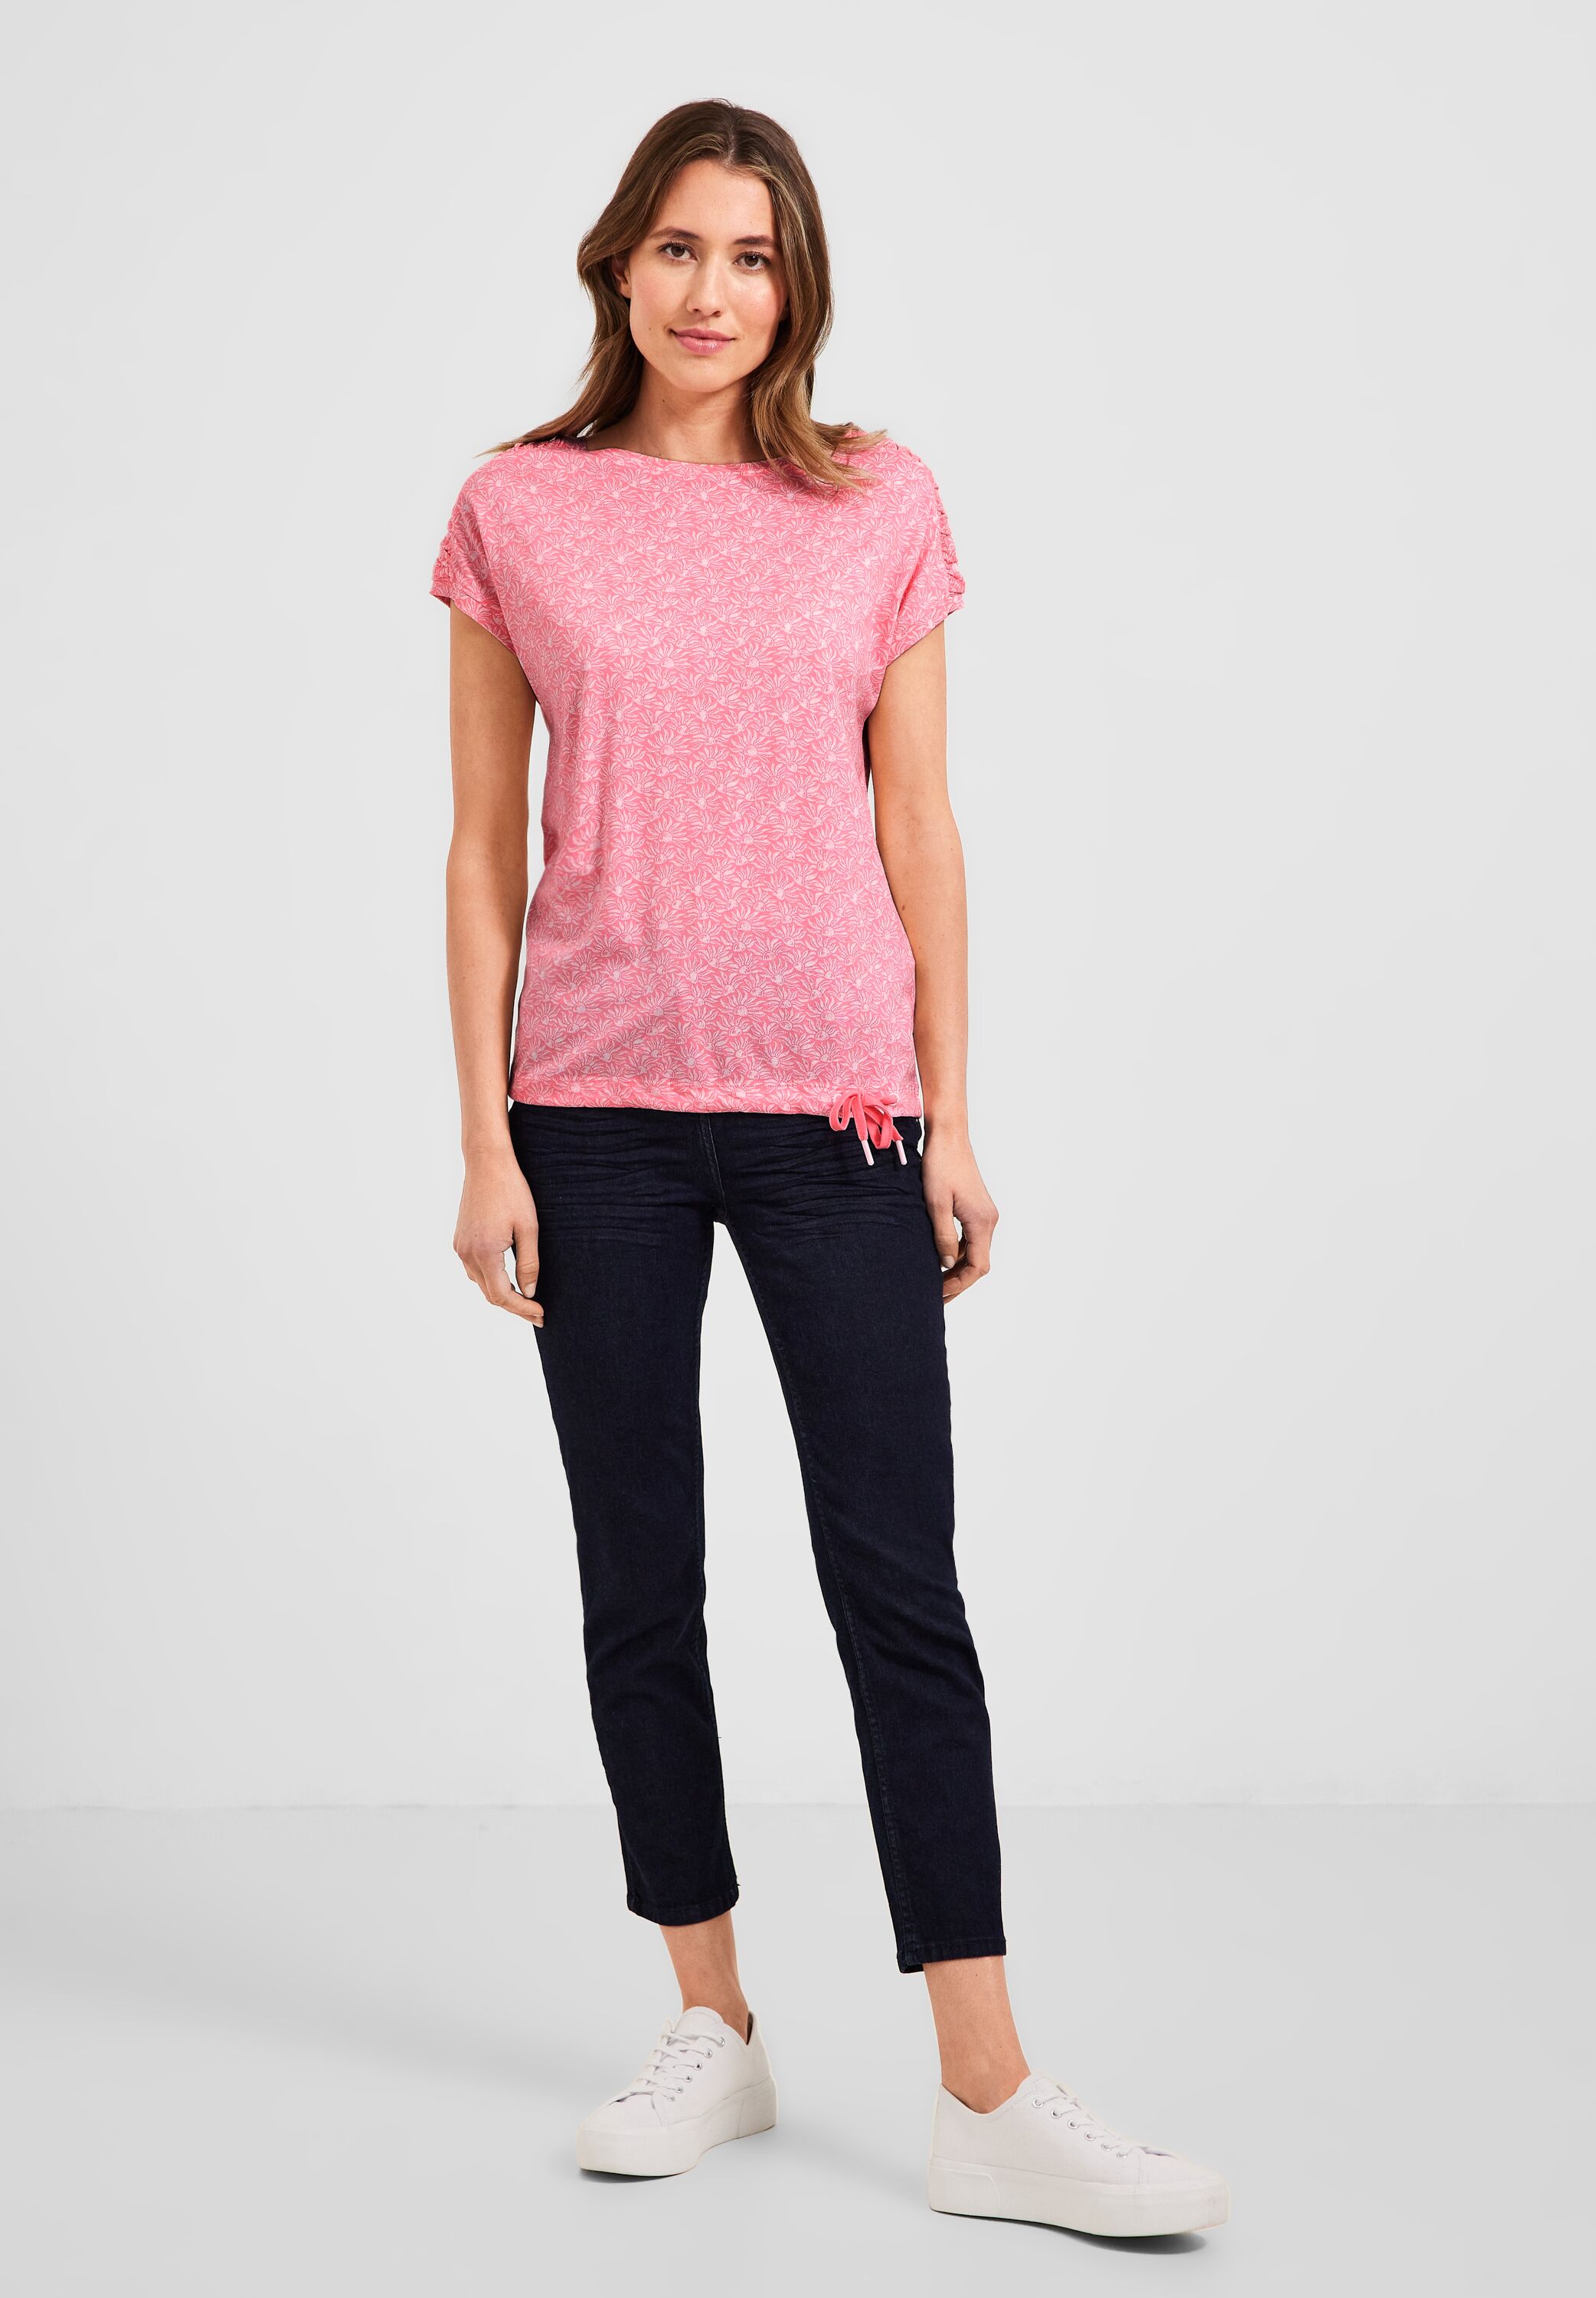 B320030-25030 - CECIL Pink CONCEPT Mode in Soft im T-Shirt SALE reduziert